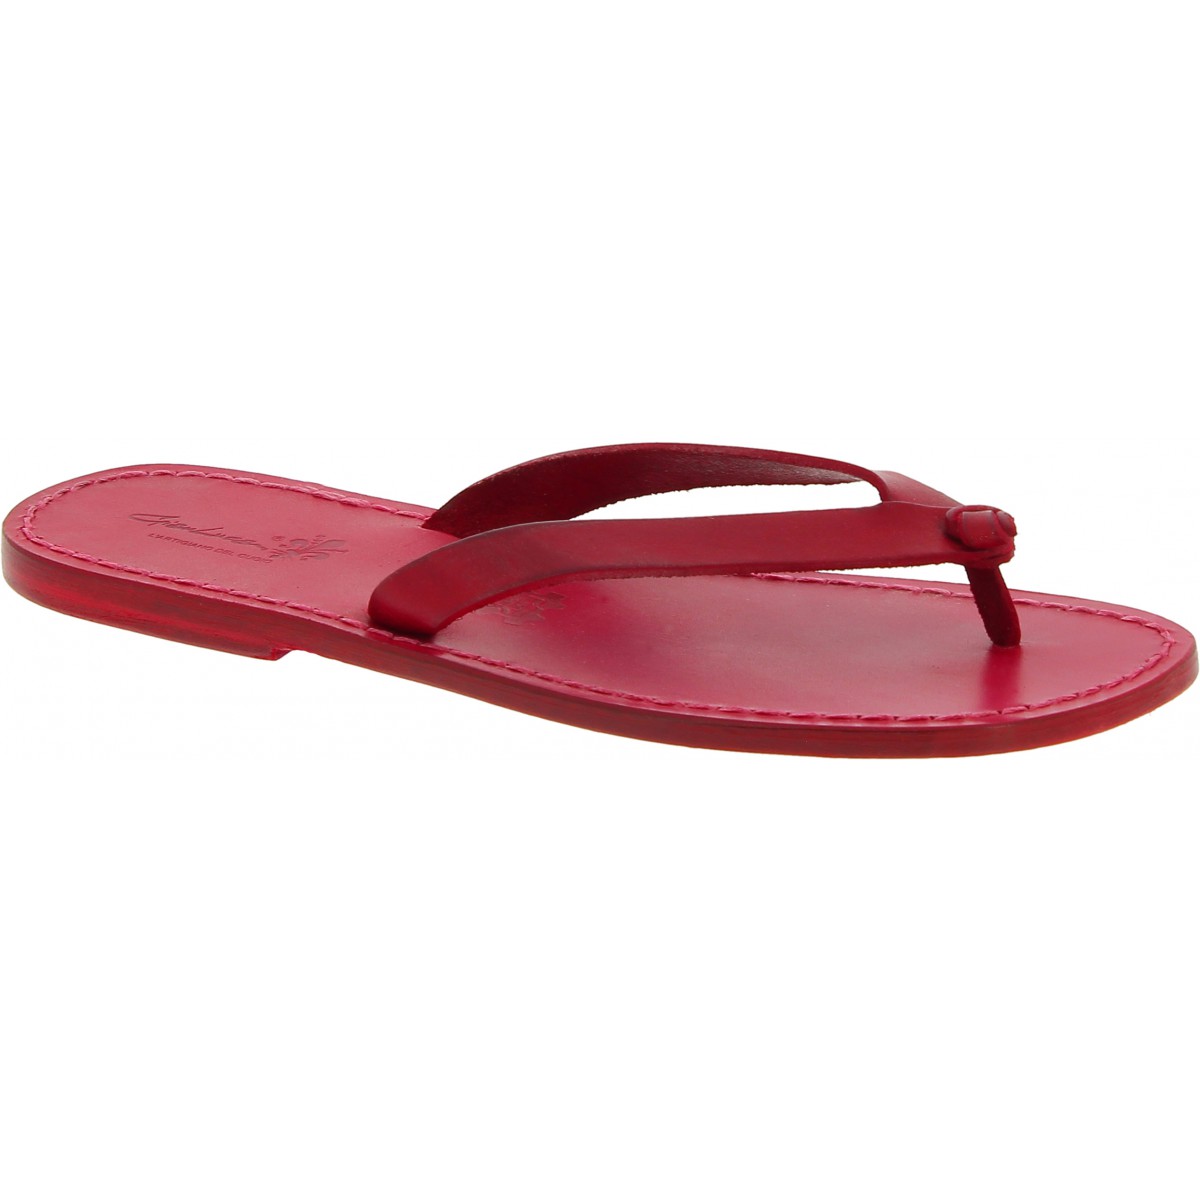 https://www.artigianodelcuo.io/3722-thickbox_default/red-leather-thongs-sandals-for-men-handmade.jpg